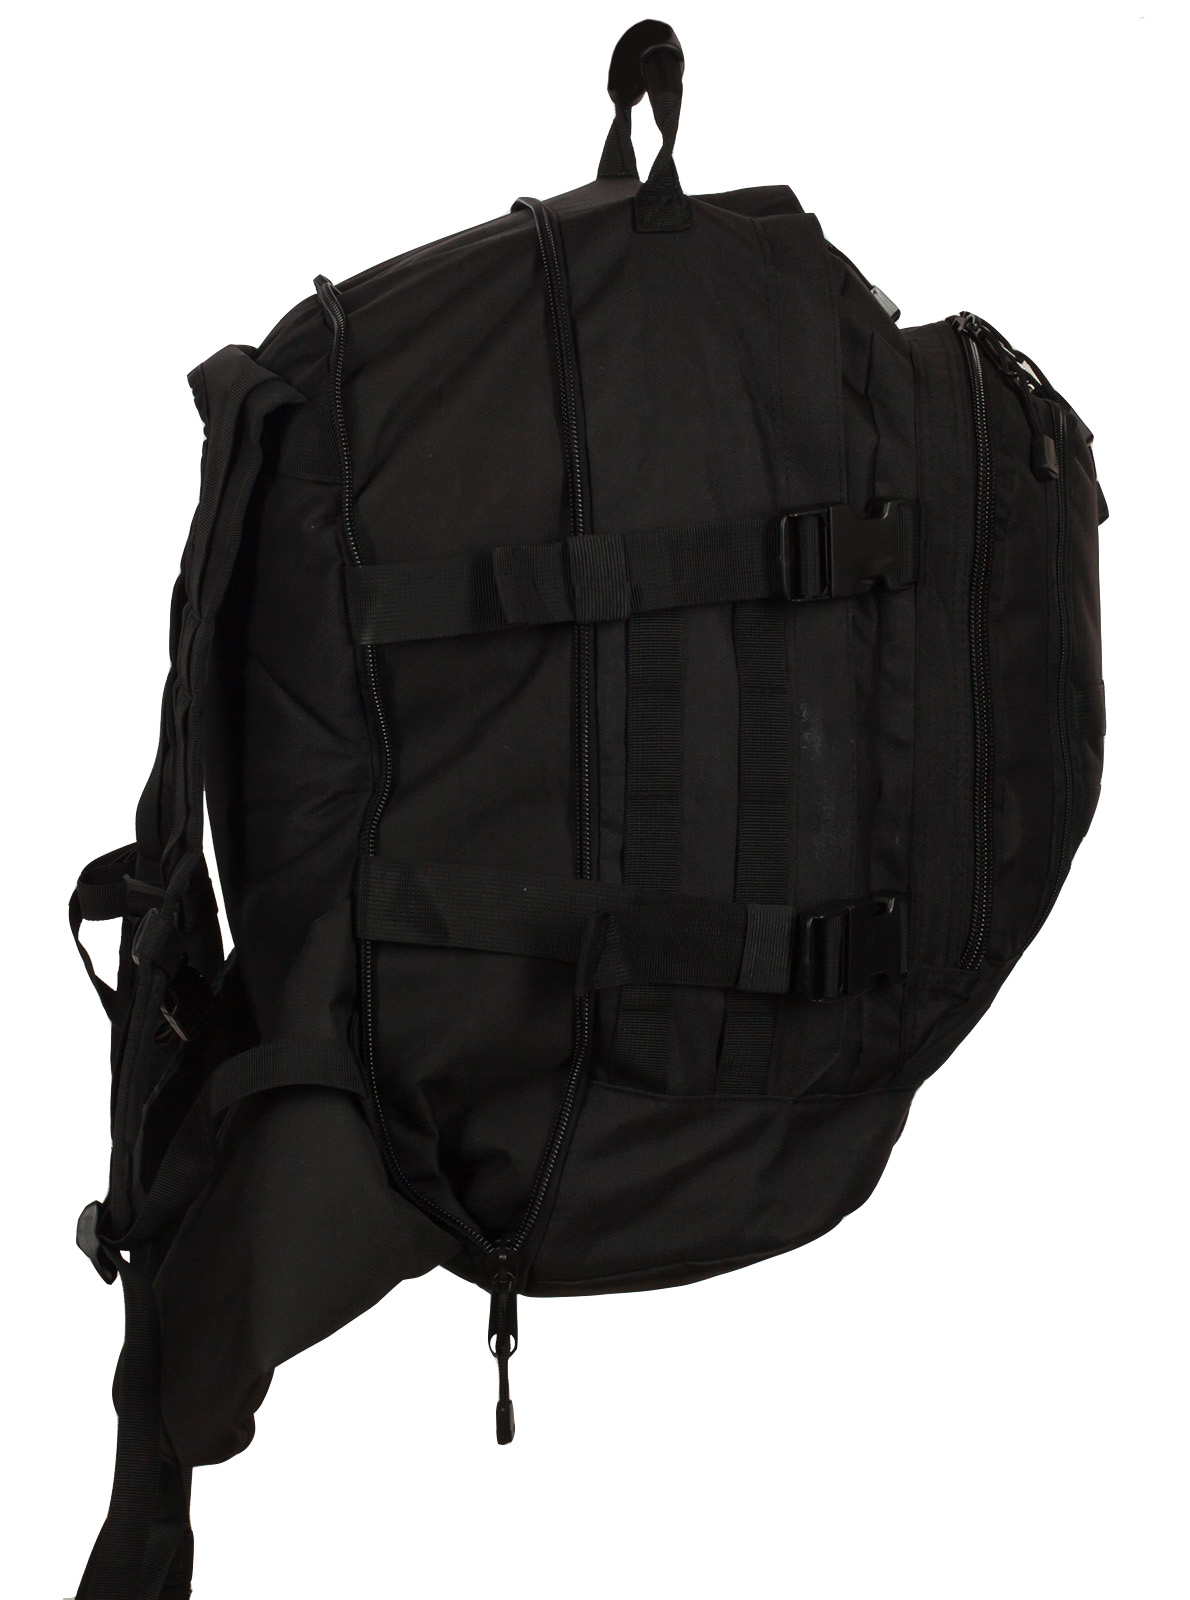 Черный армейский рюкзак 3-Day Expandable Backpack 08002A Black с эмблемой "Россия" 